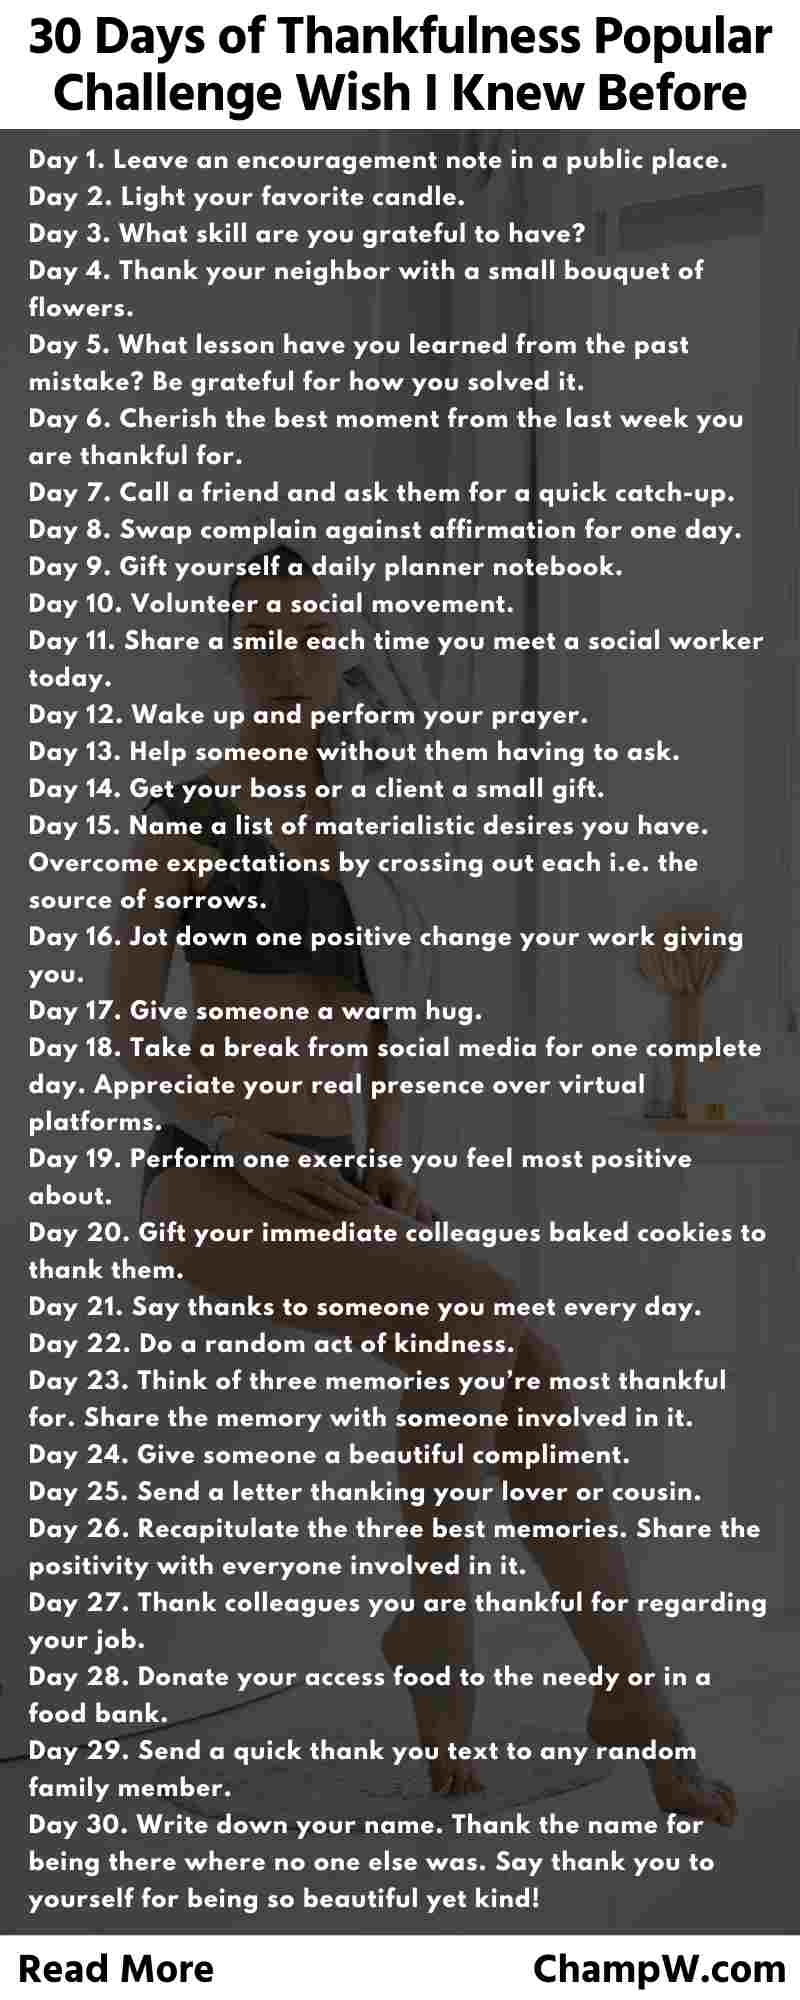 30 Days of Thankfulness Popular Challenge Wish I Knew Before